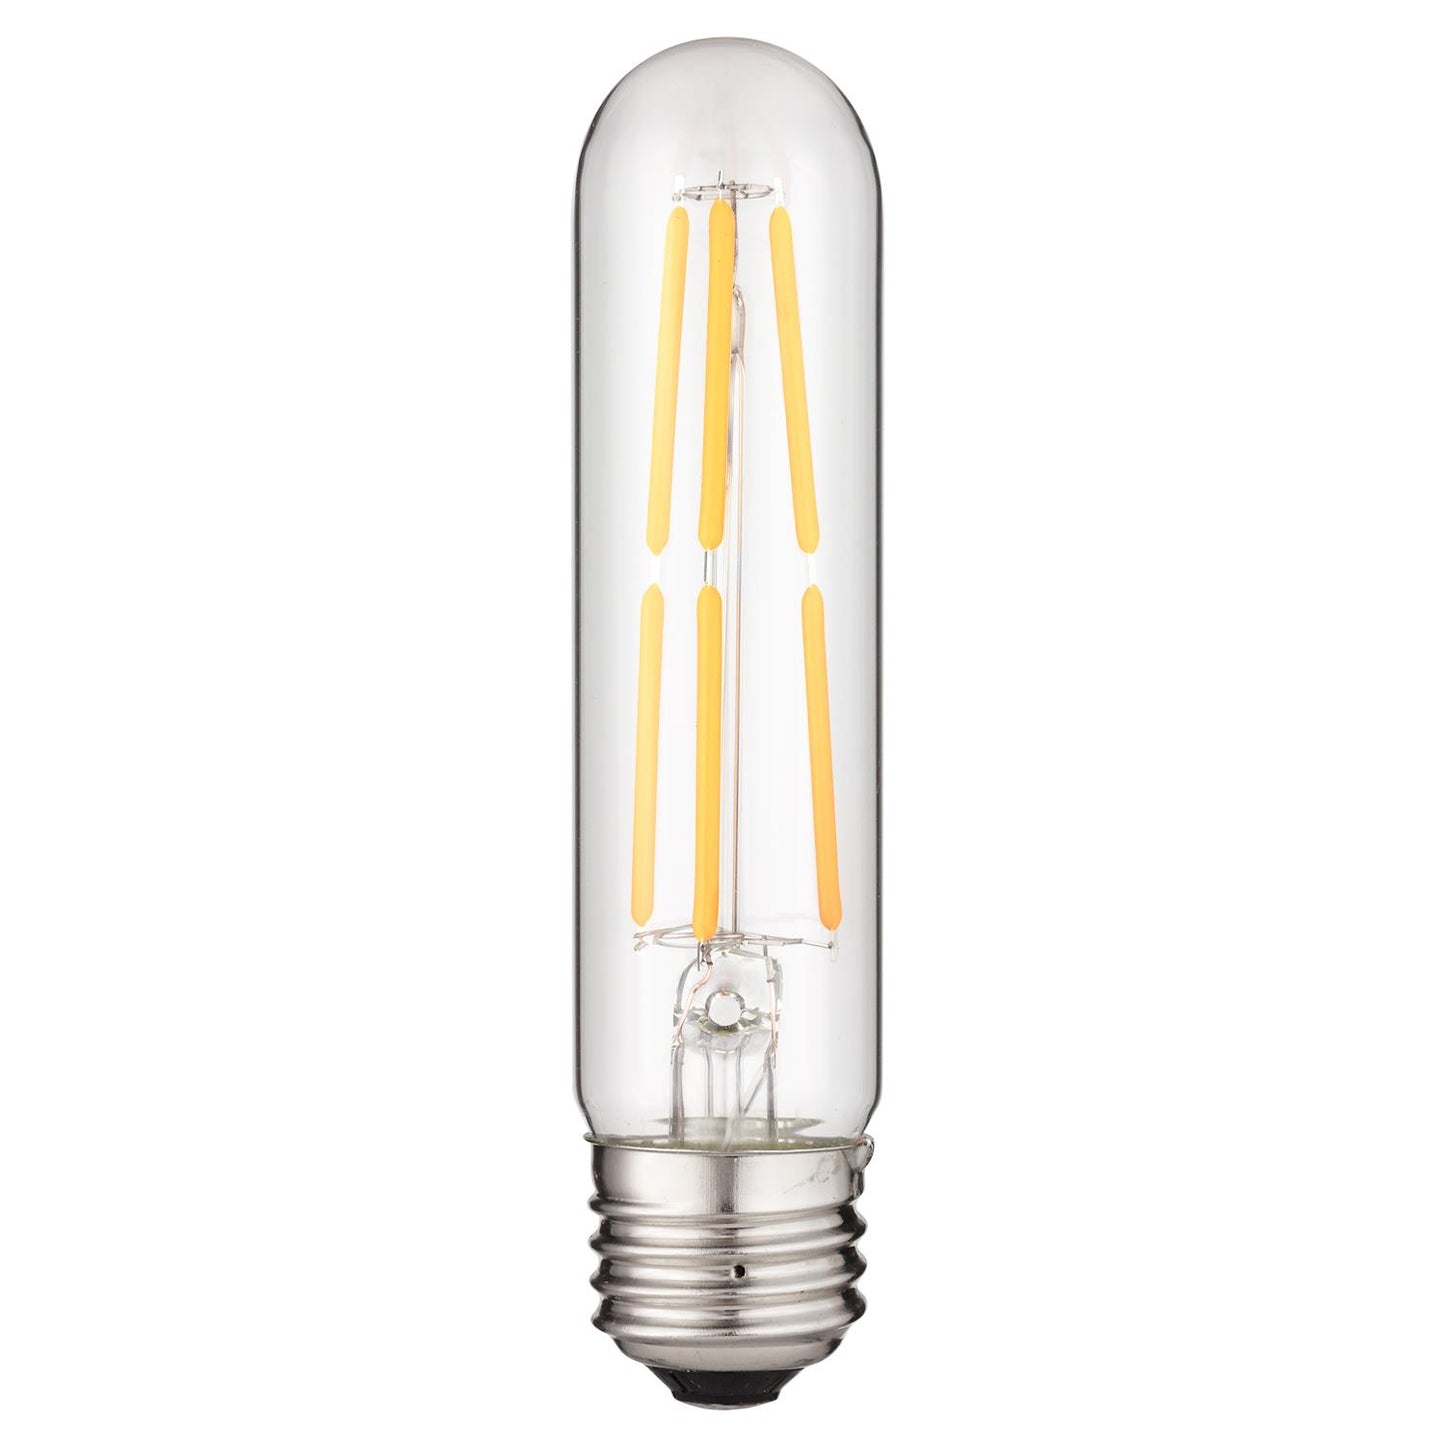 Sunlite LED Vintage T10 5W Light Bulb Medium (E26) Base, Warm White